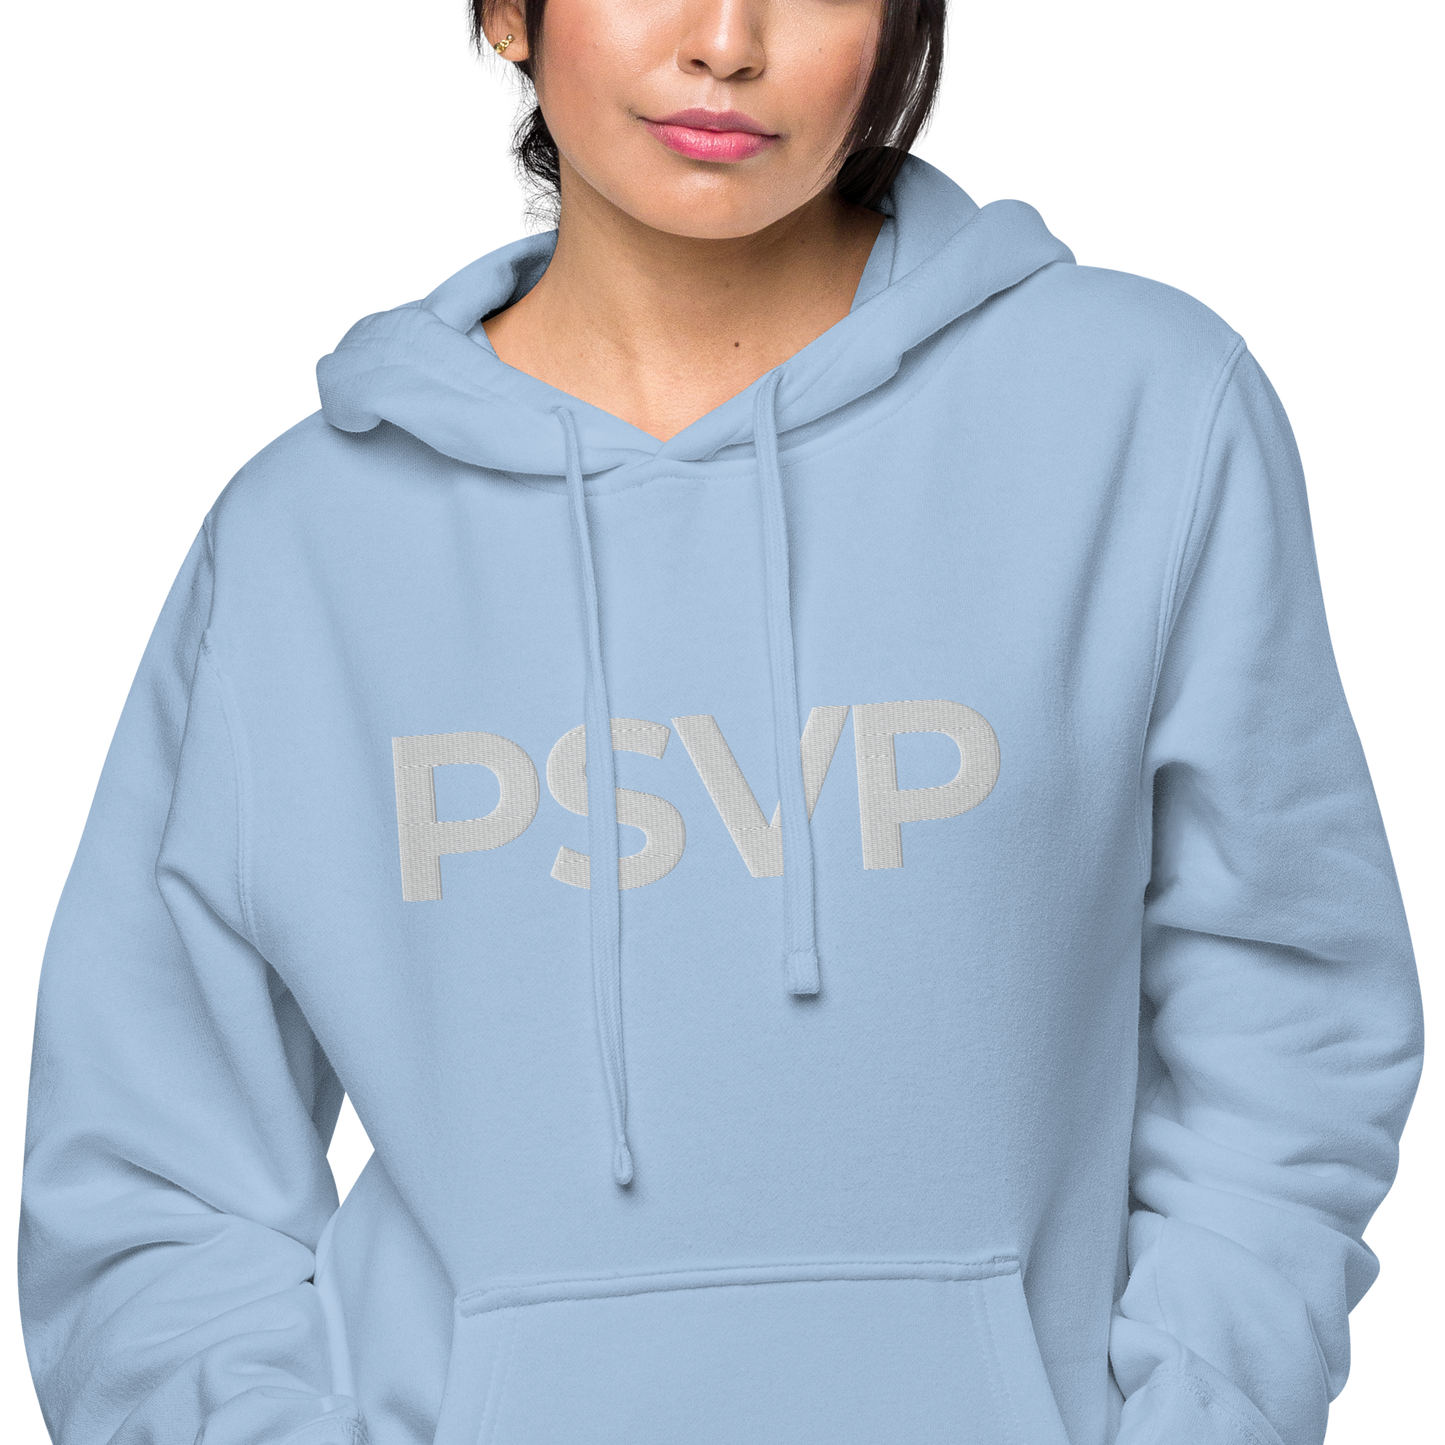 Women's Pigment-Dyed Light Blue Hoodie - PSVP Embroidery | Hoodie | PARADIS SVP